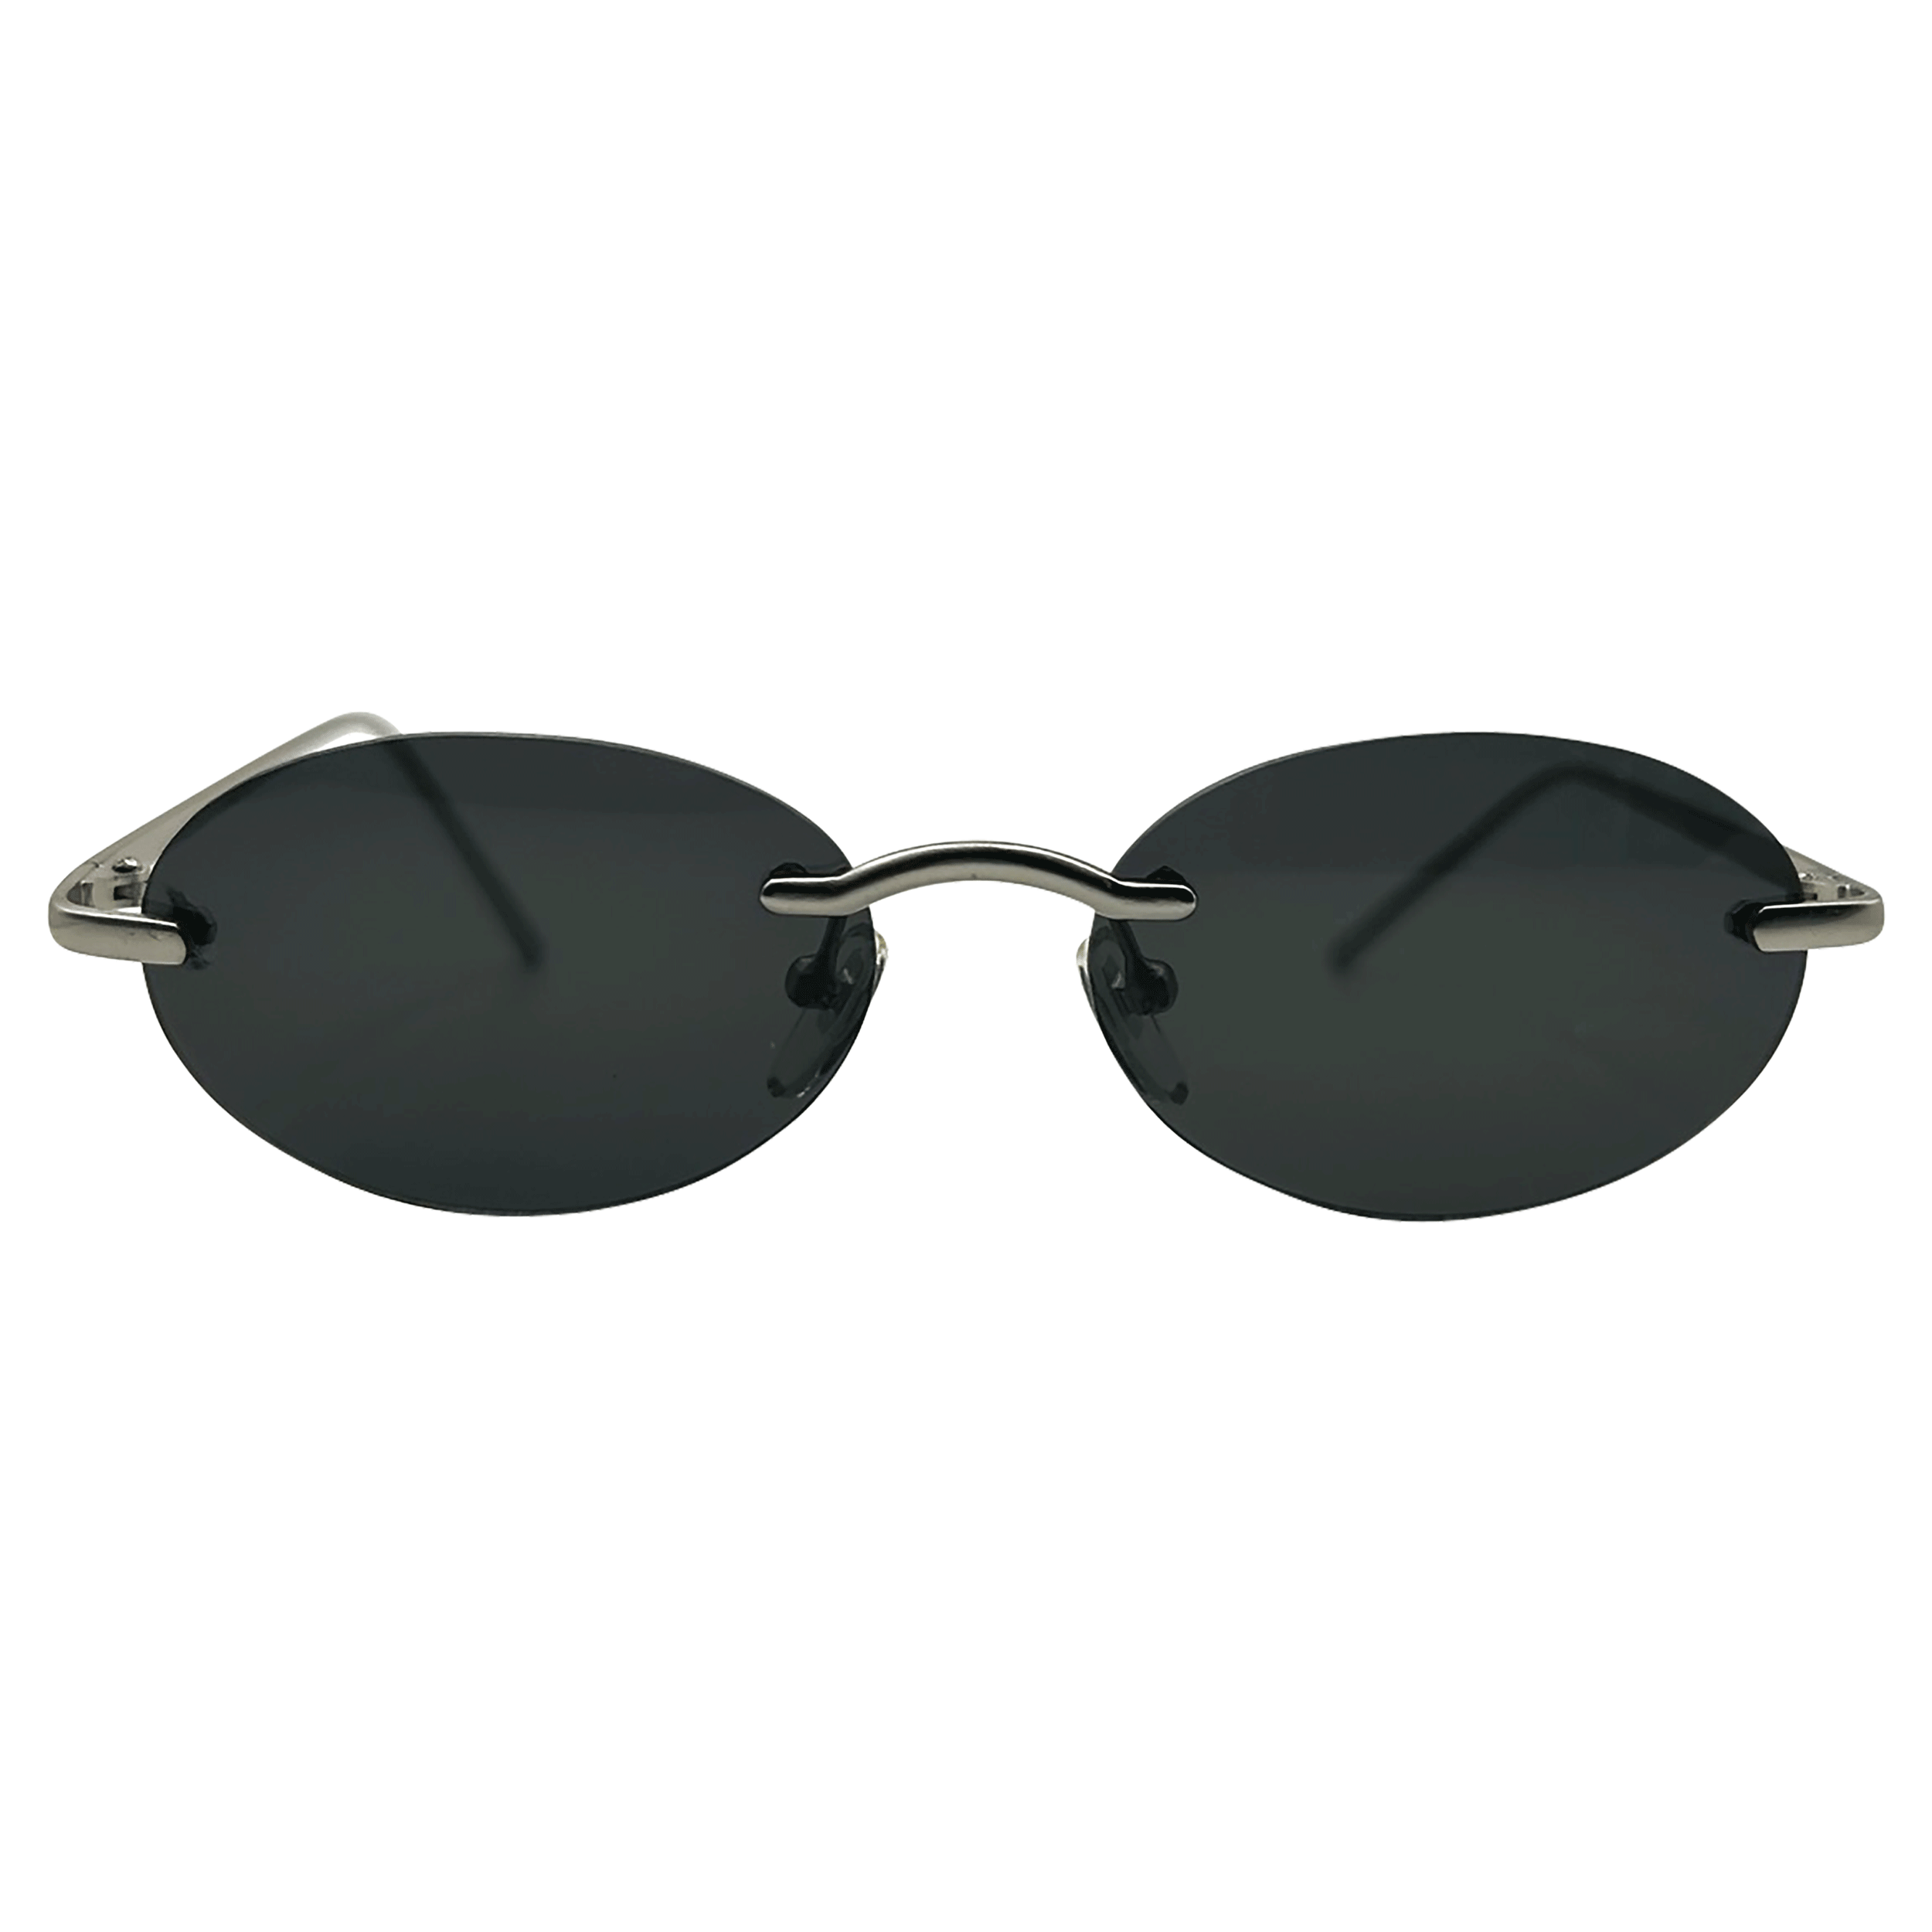 TASSIO Rimless Oval Sunglasses